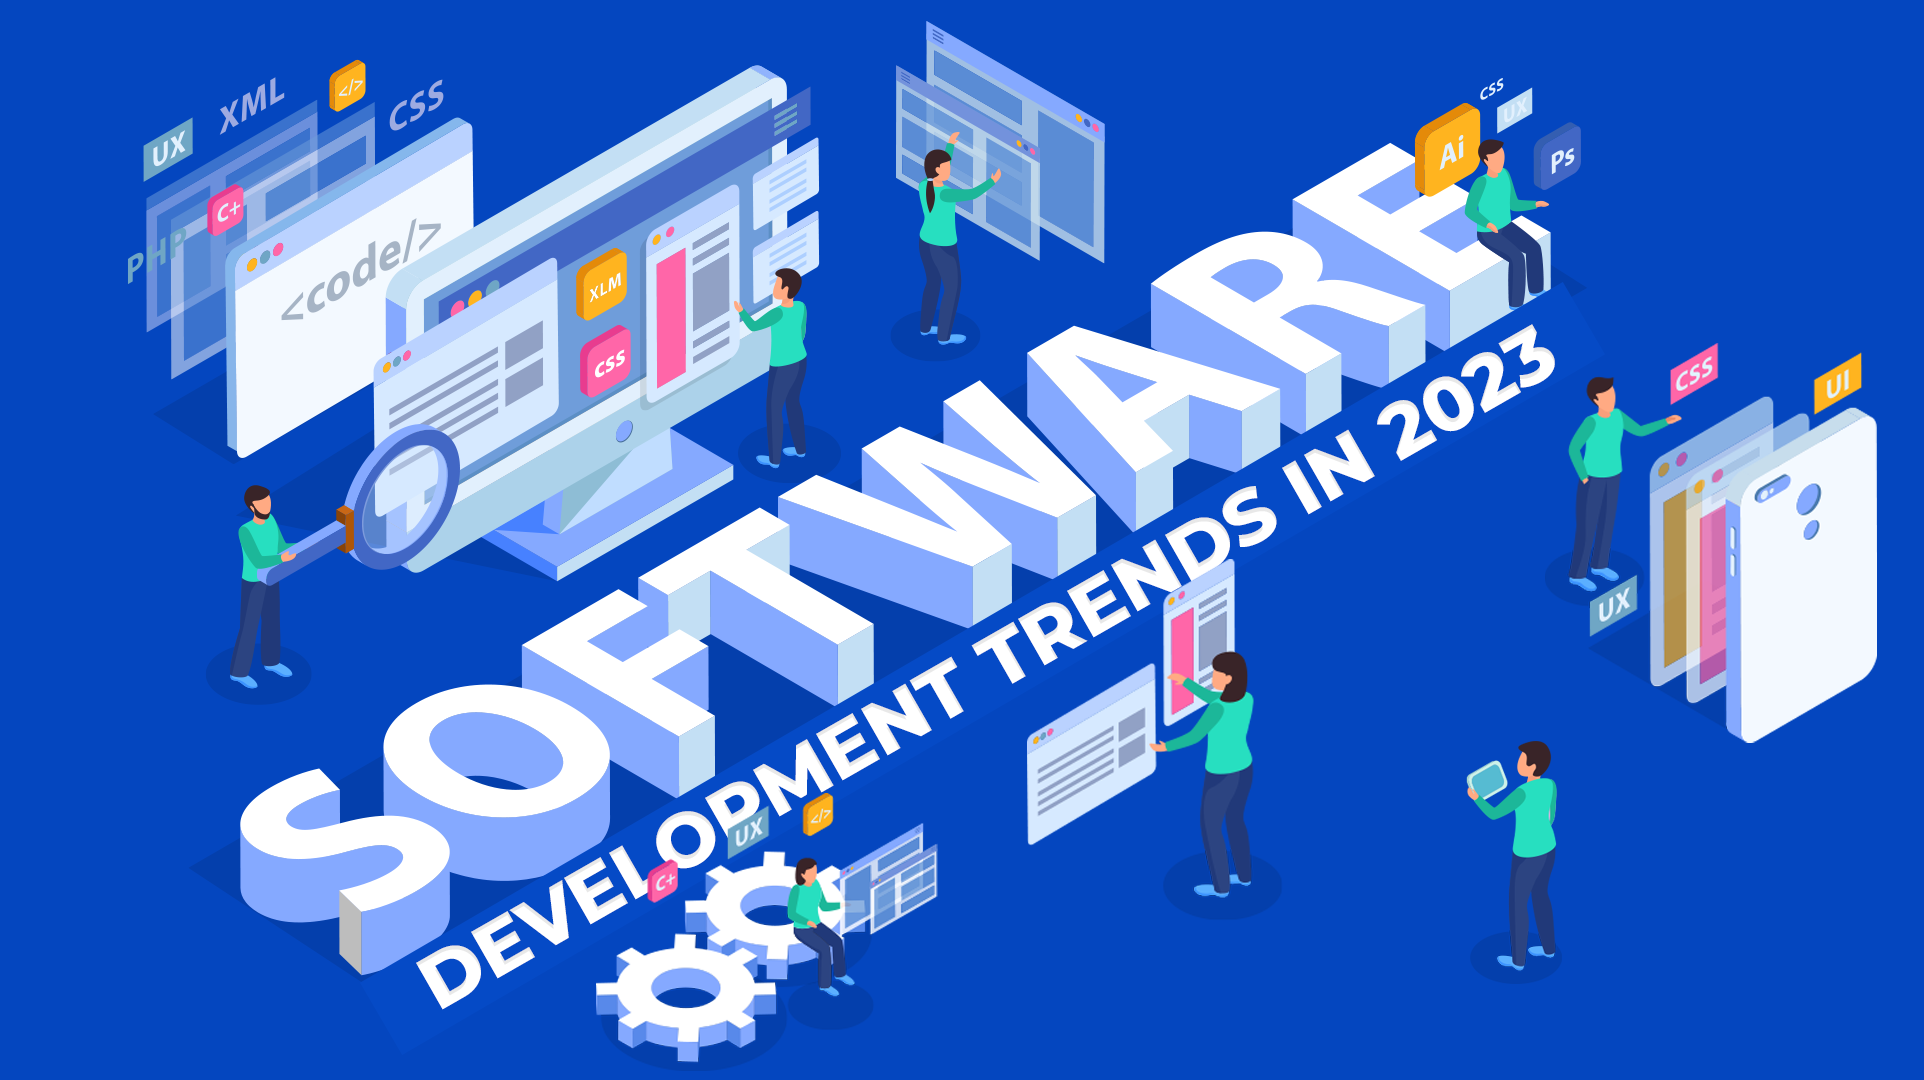 Top 10 Software Development Trends For 2023